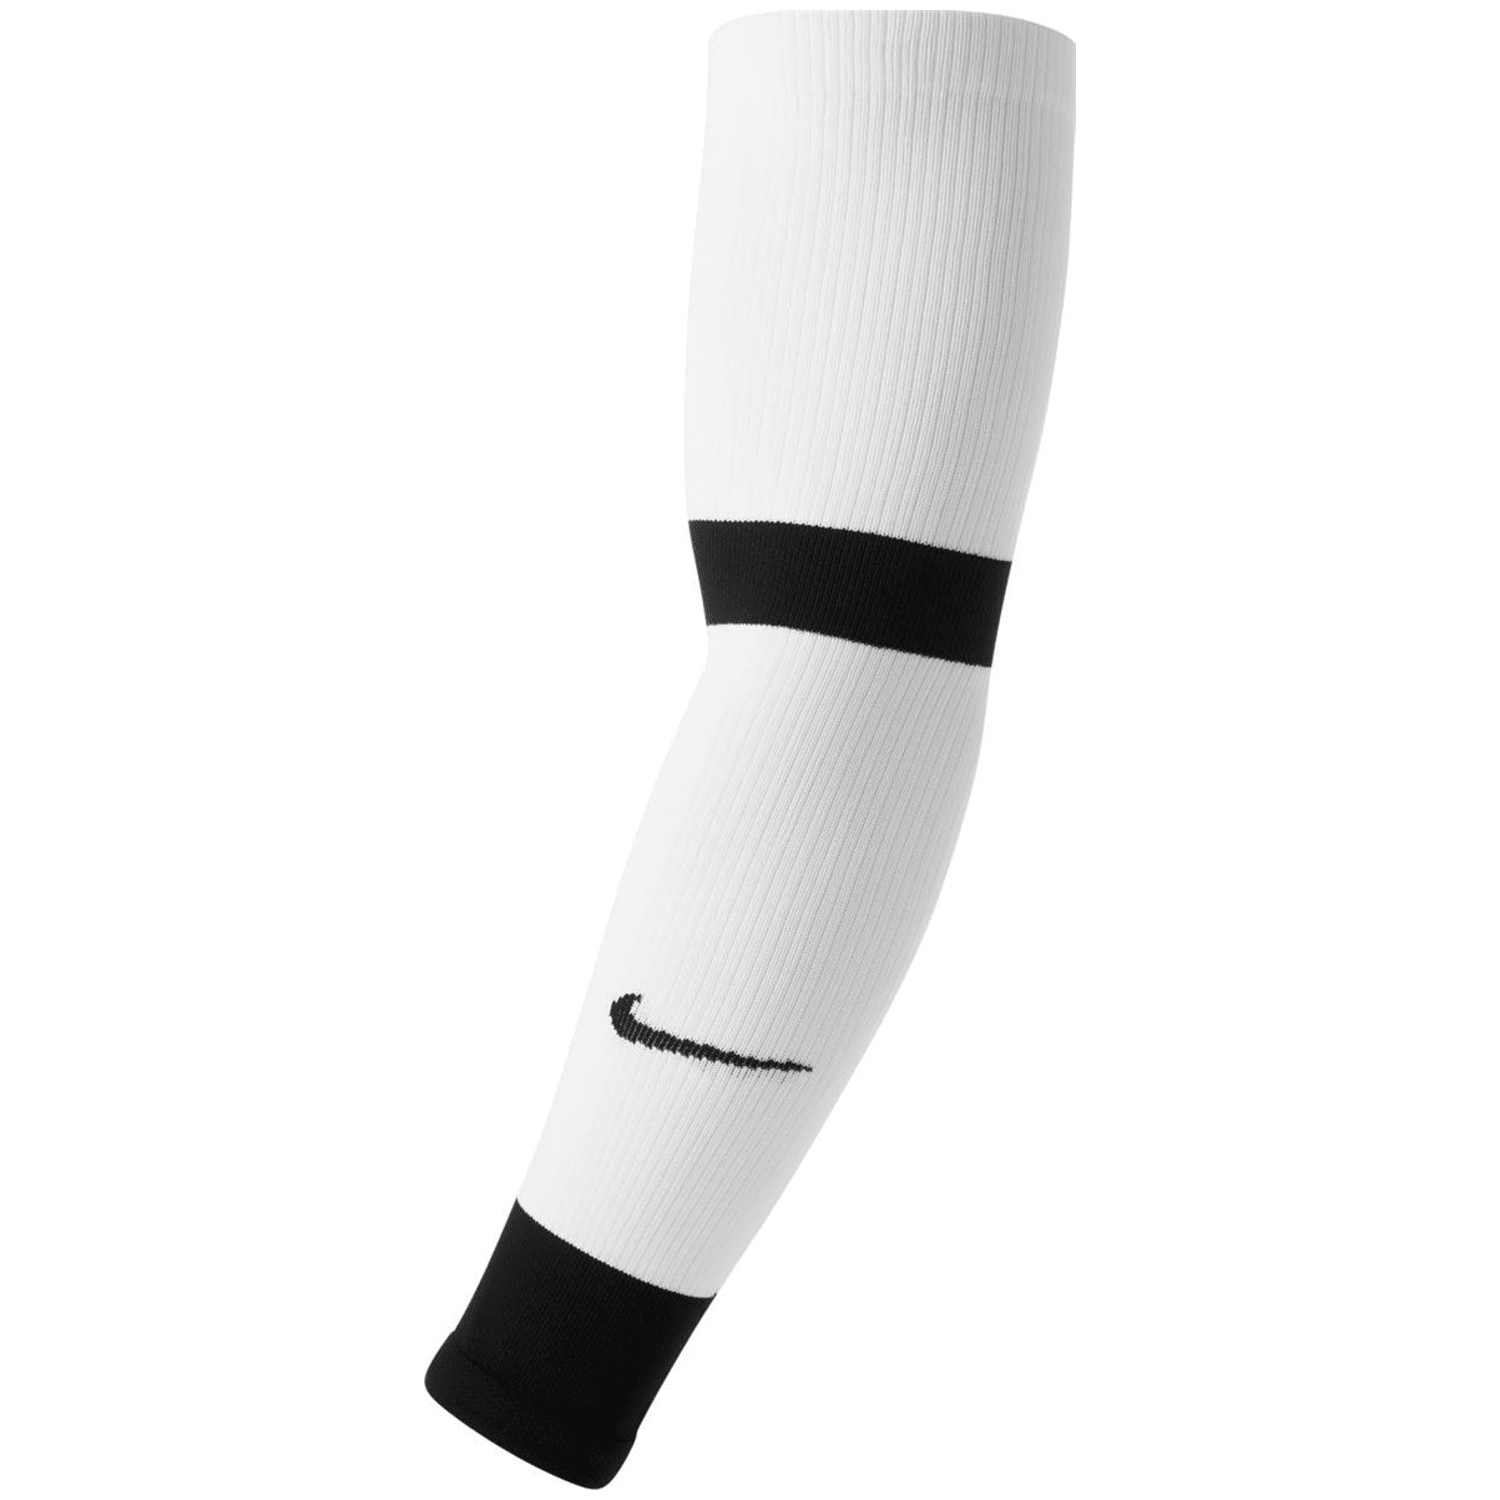 Nike MatchFit Sleeve